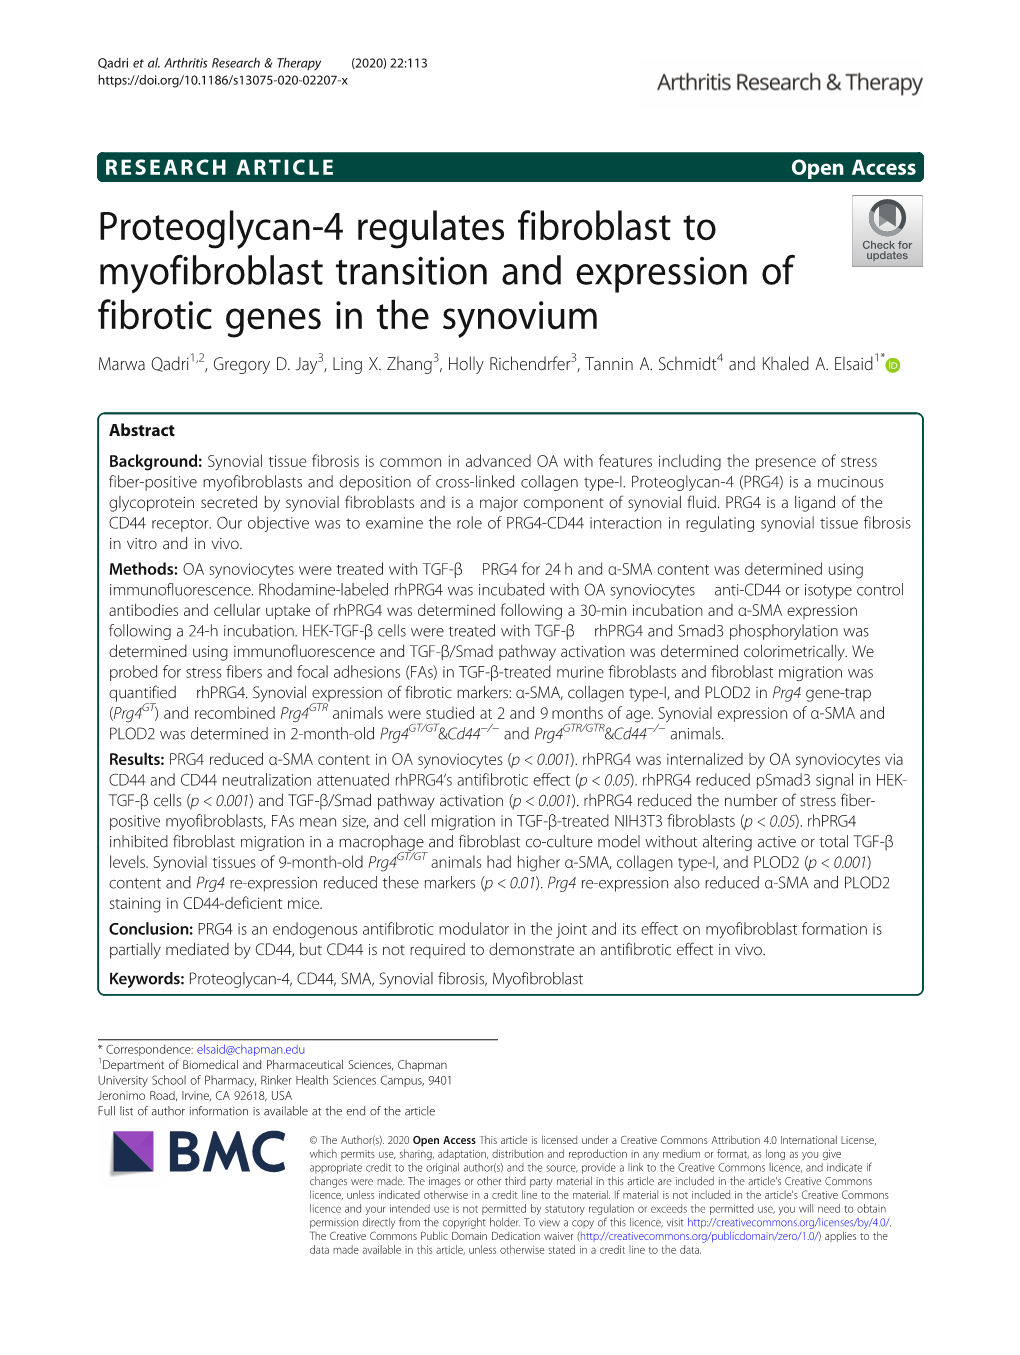 Proteoglycan-4 Regulates Fibroblast to Myofibroblast Transition and Expression of Fibrotic Genes in the Synovium Marwa Qadri1,2, Gregory D